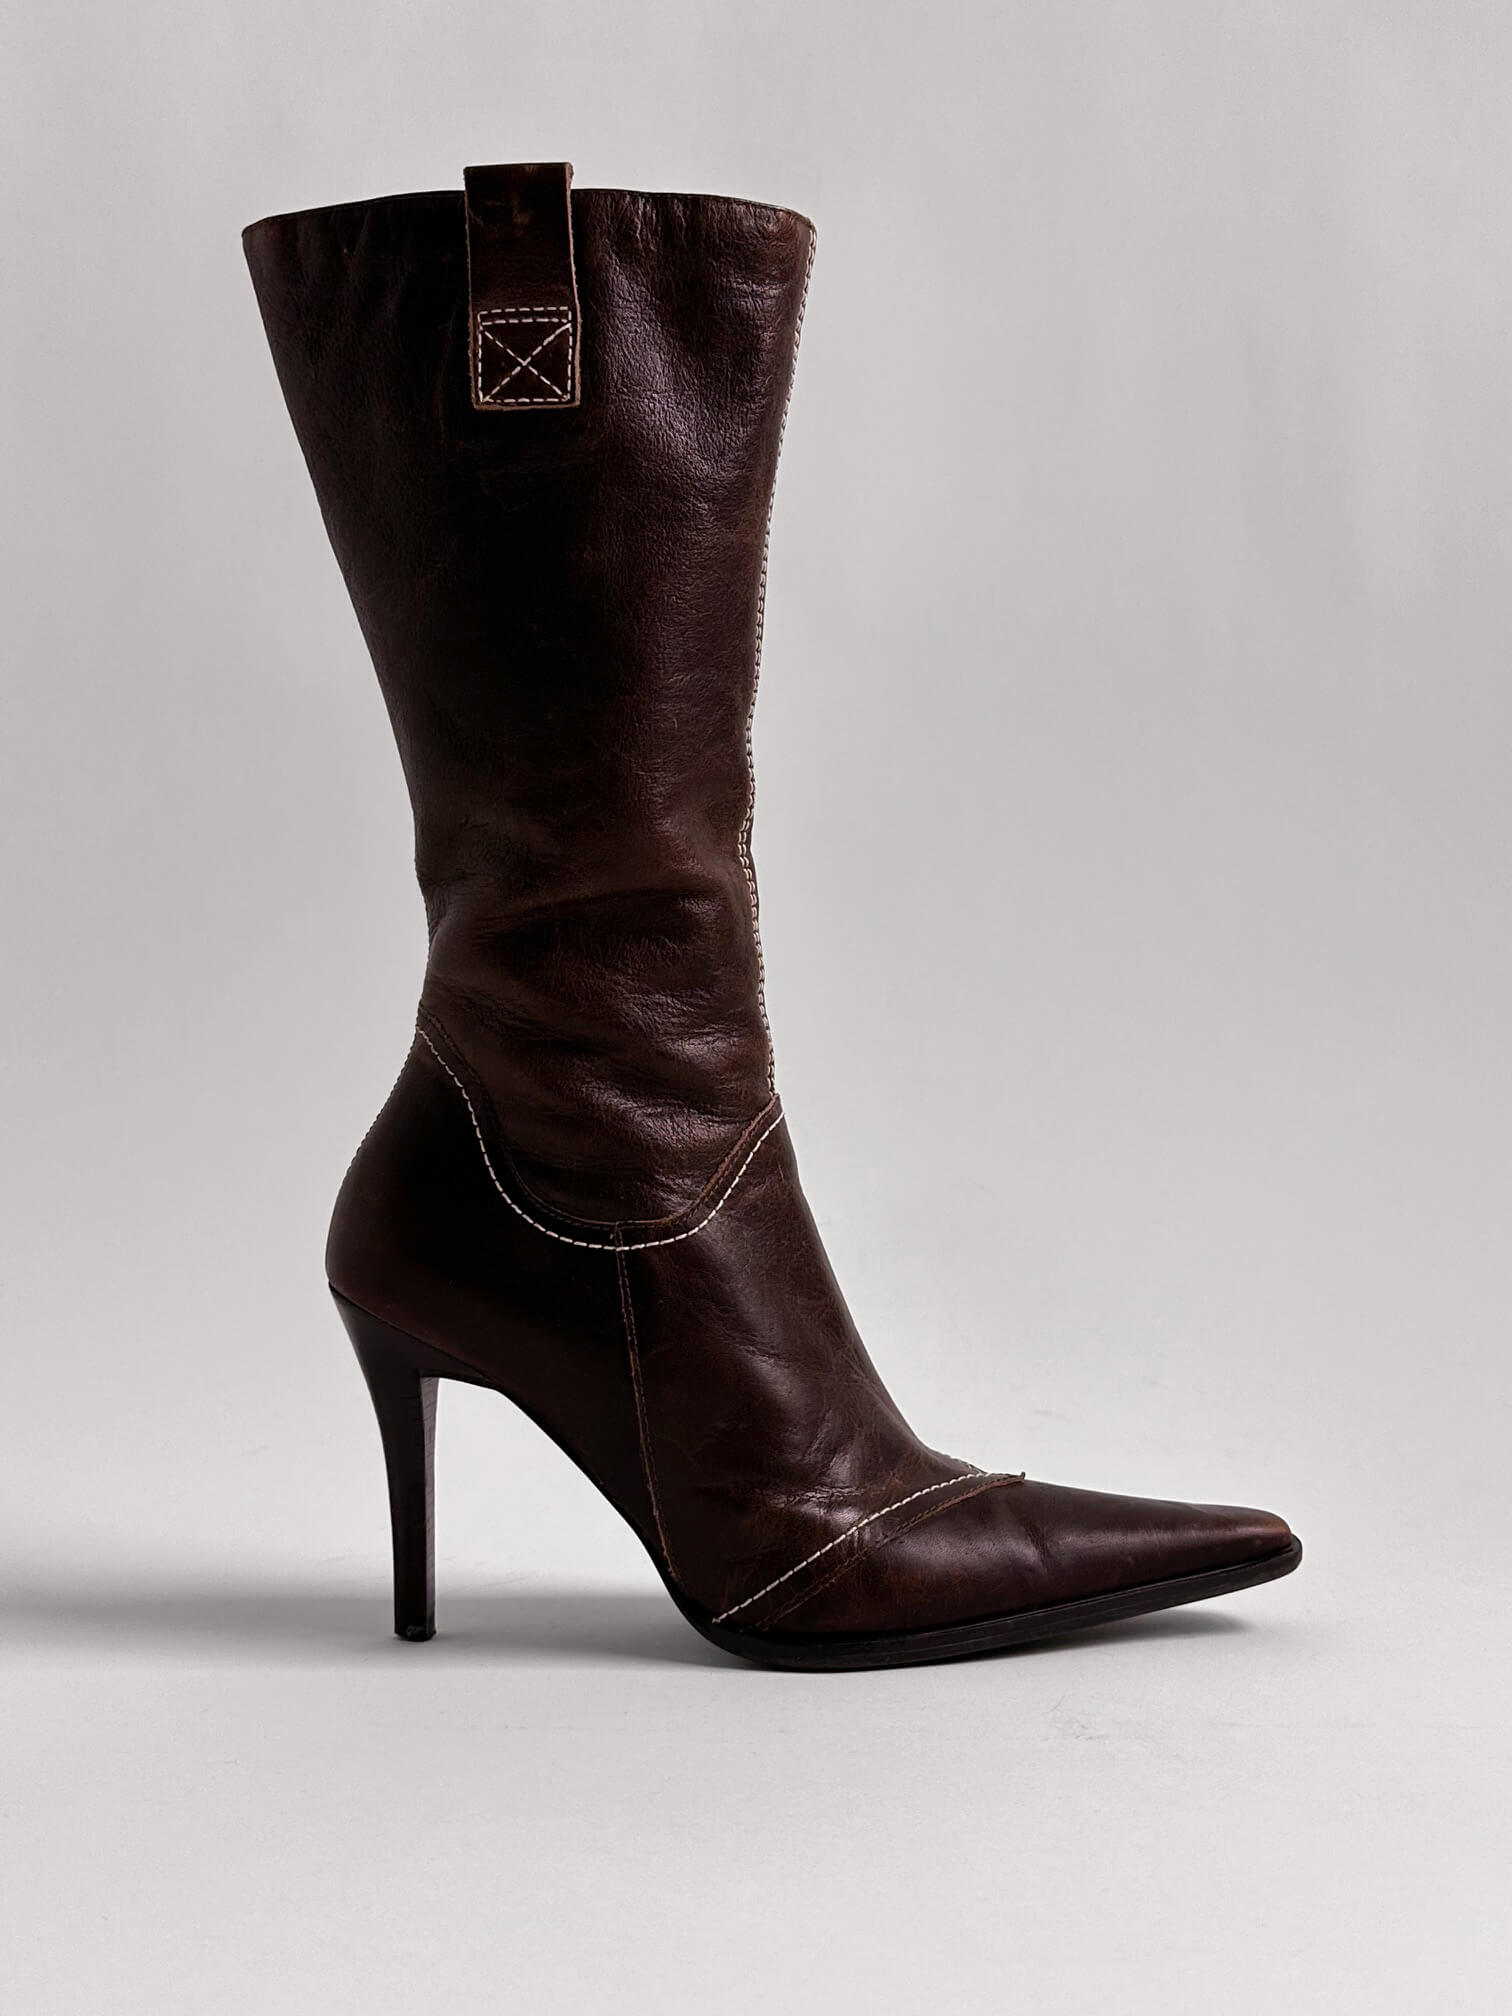 Vintage ALDO Brown Patina Leather Boots | 8 US/39 EU